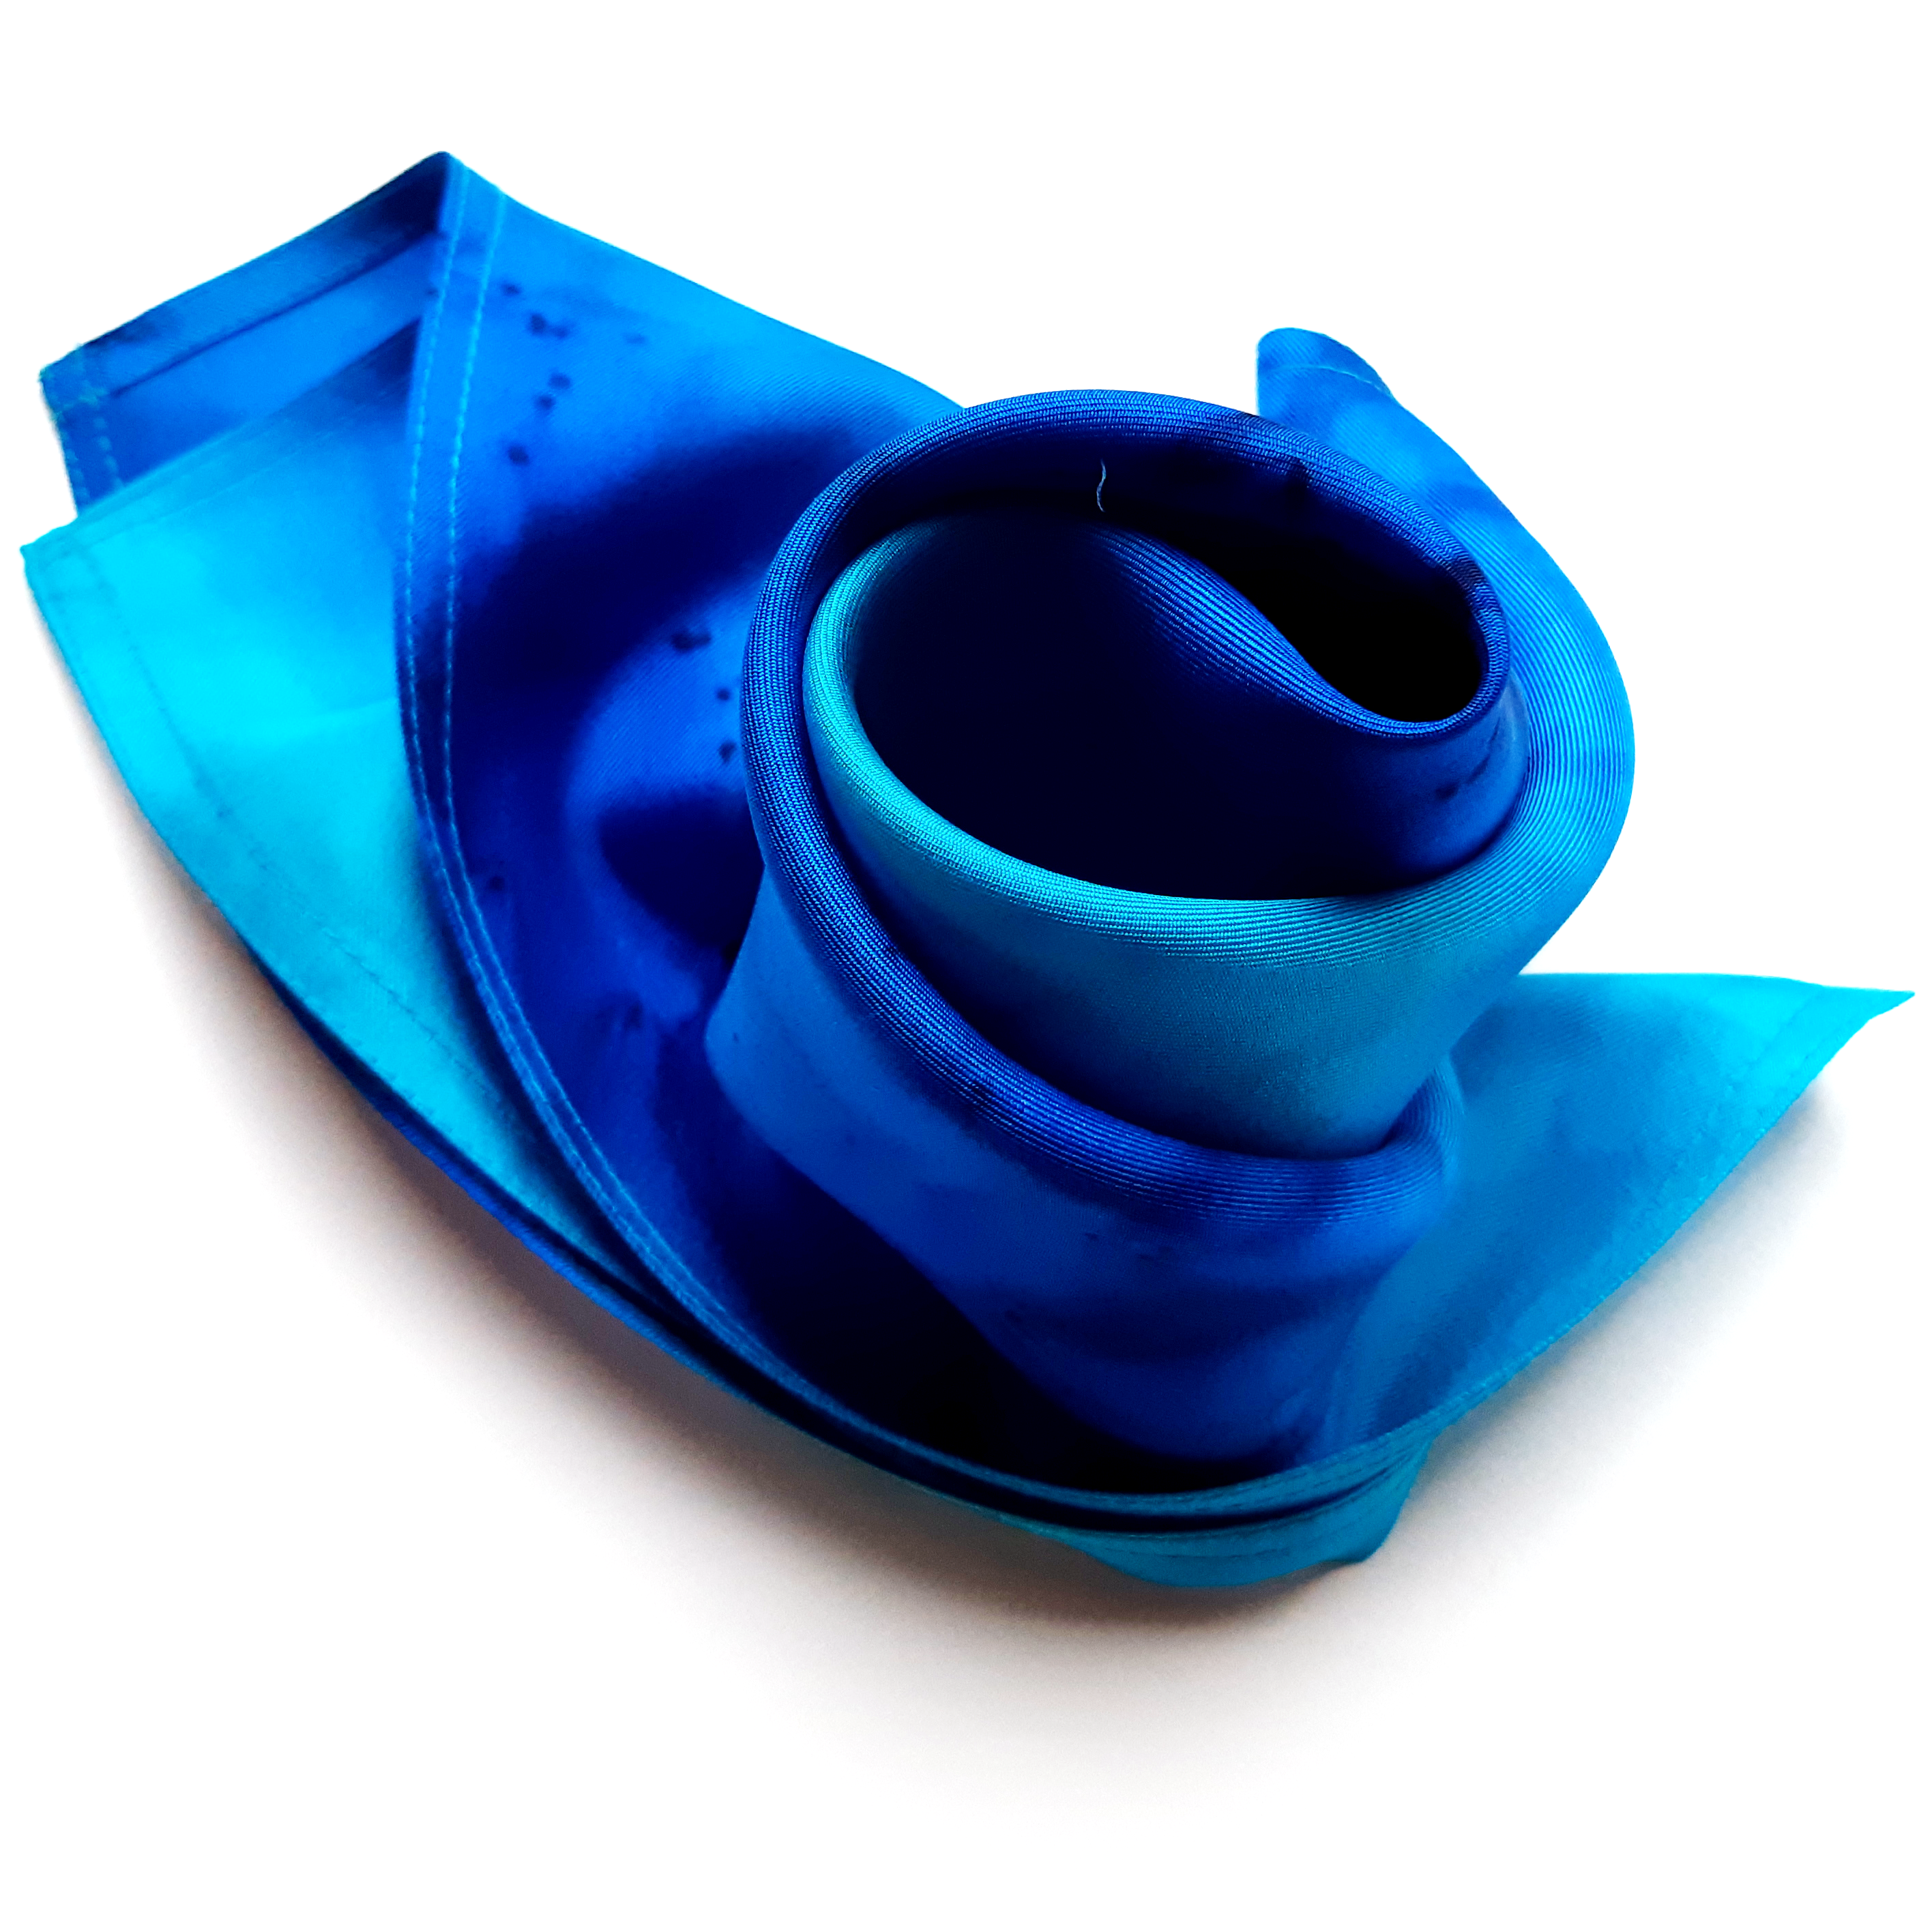 Men's fashion blue silk pocket square hand dyed made in Canada by Lynne Kiel